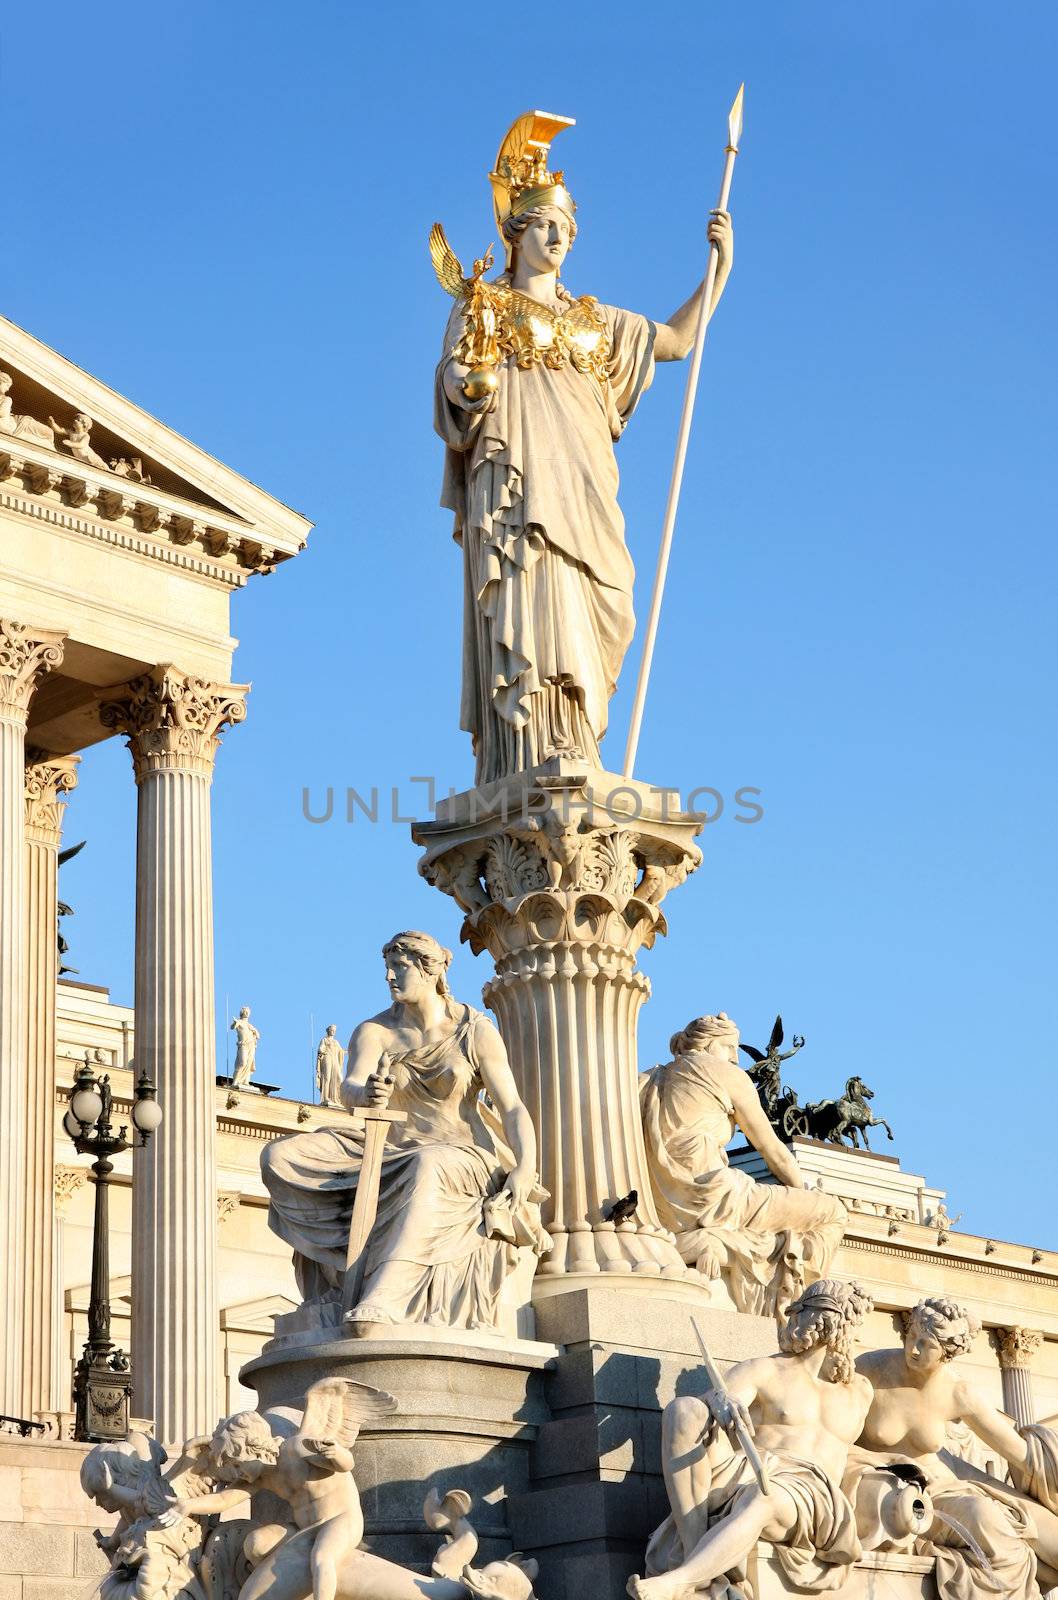 The Austrian Parliament and Athena Fountain in Vienna, Austria by vladacanon